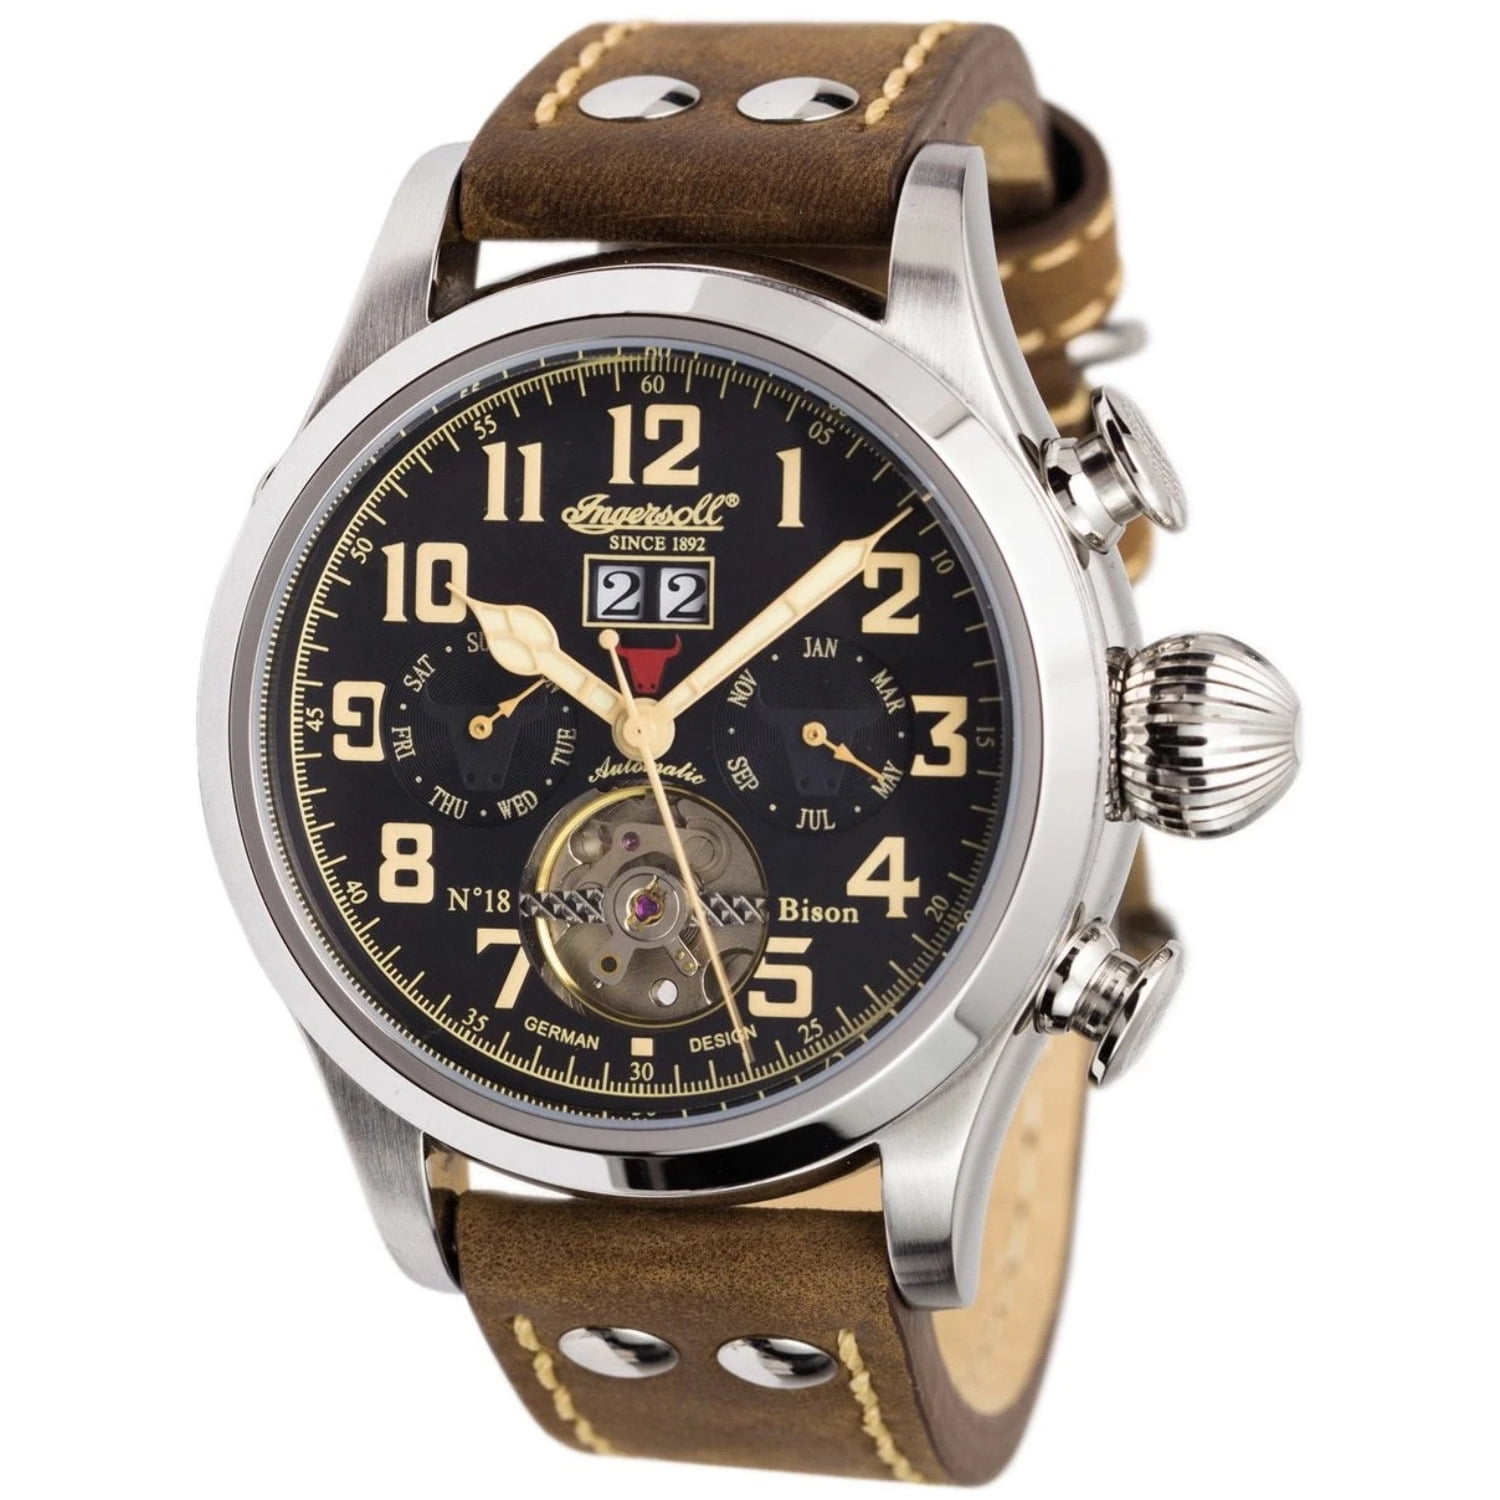 Ingersoll-Rand Chronometre Pocket Watch 